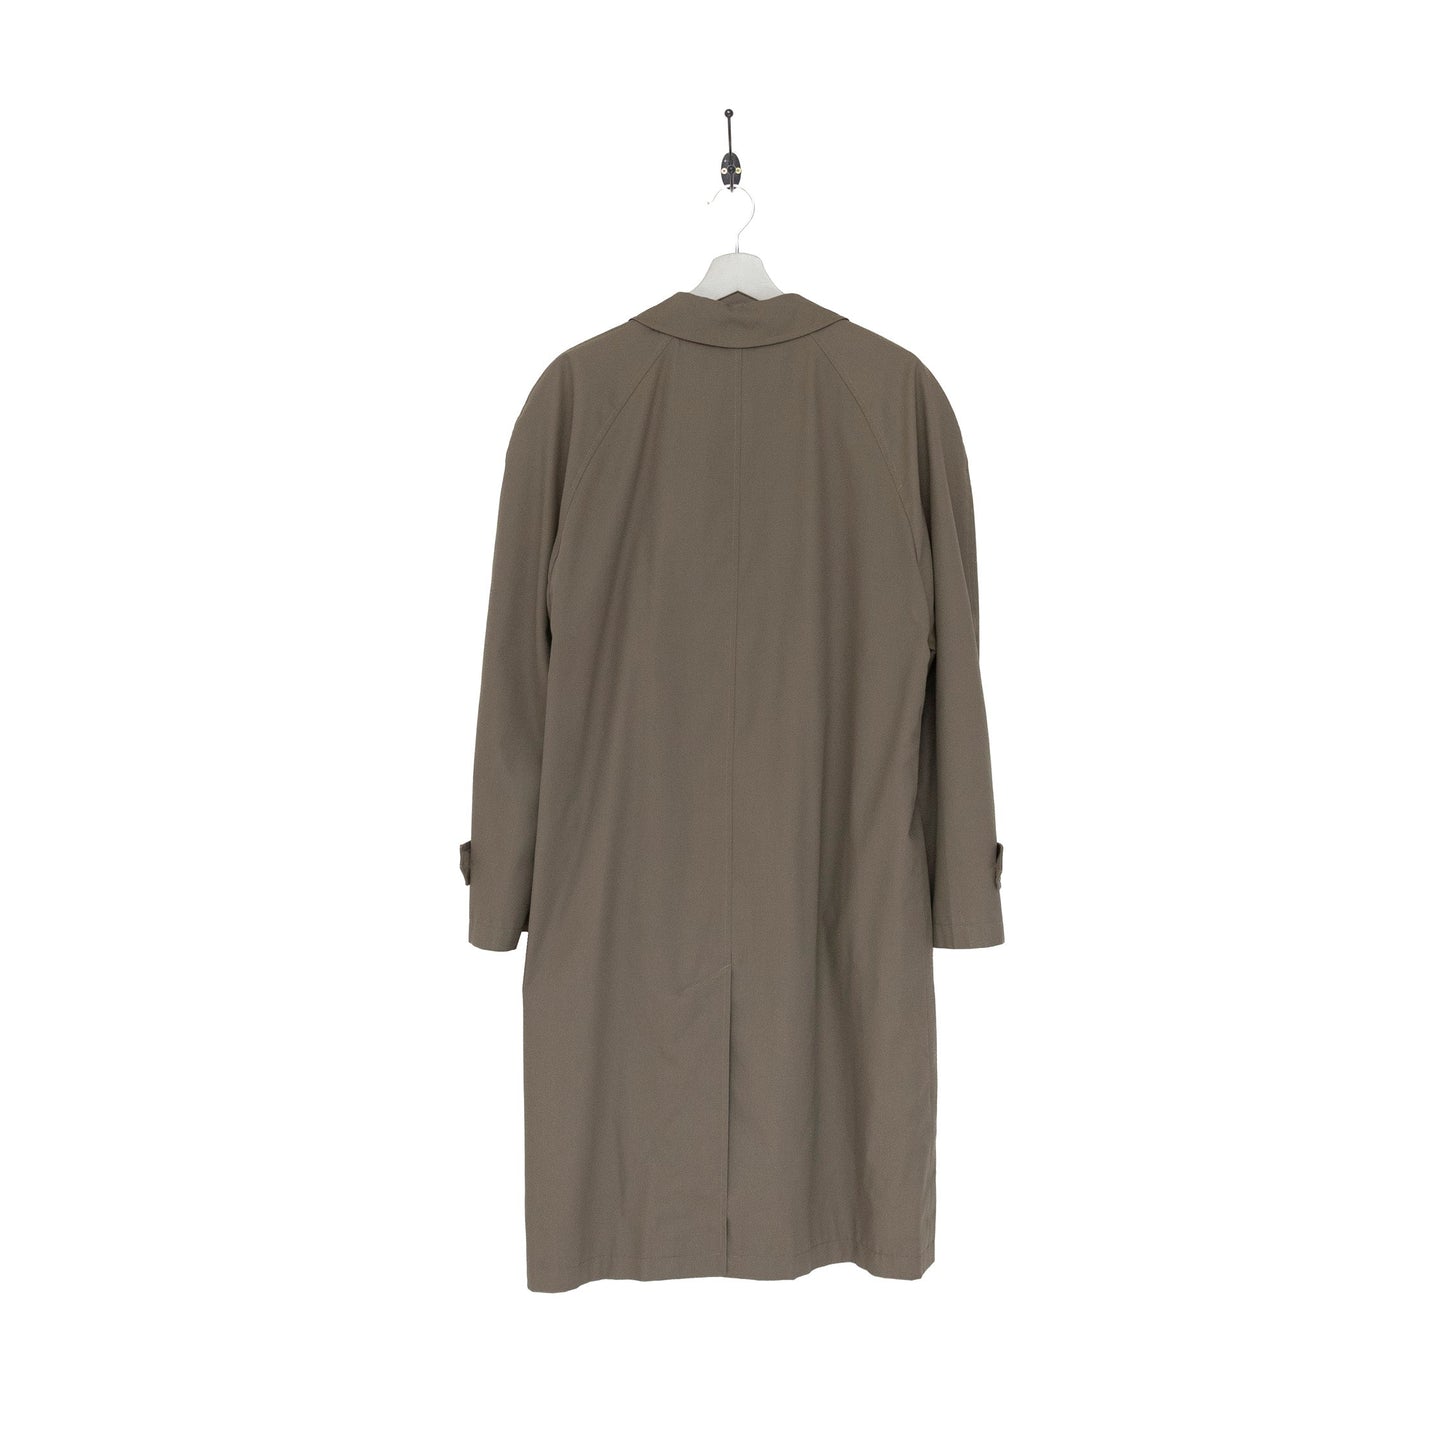 Yves Saint Laurent Olive Trench Coat